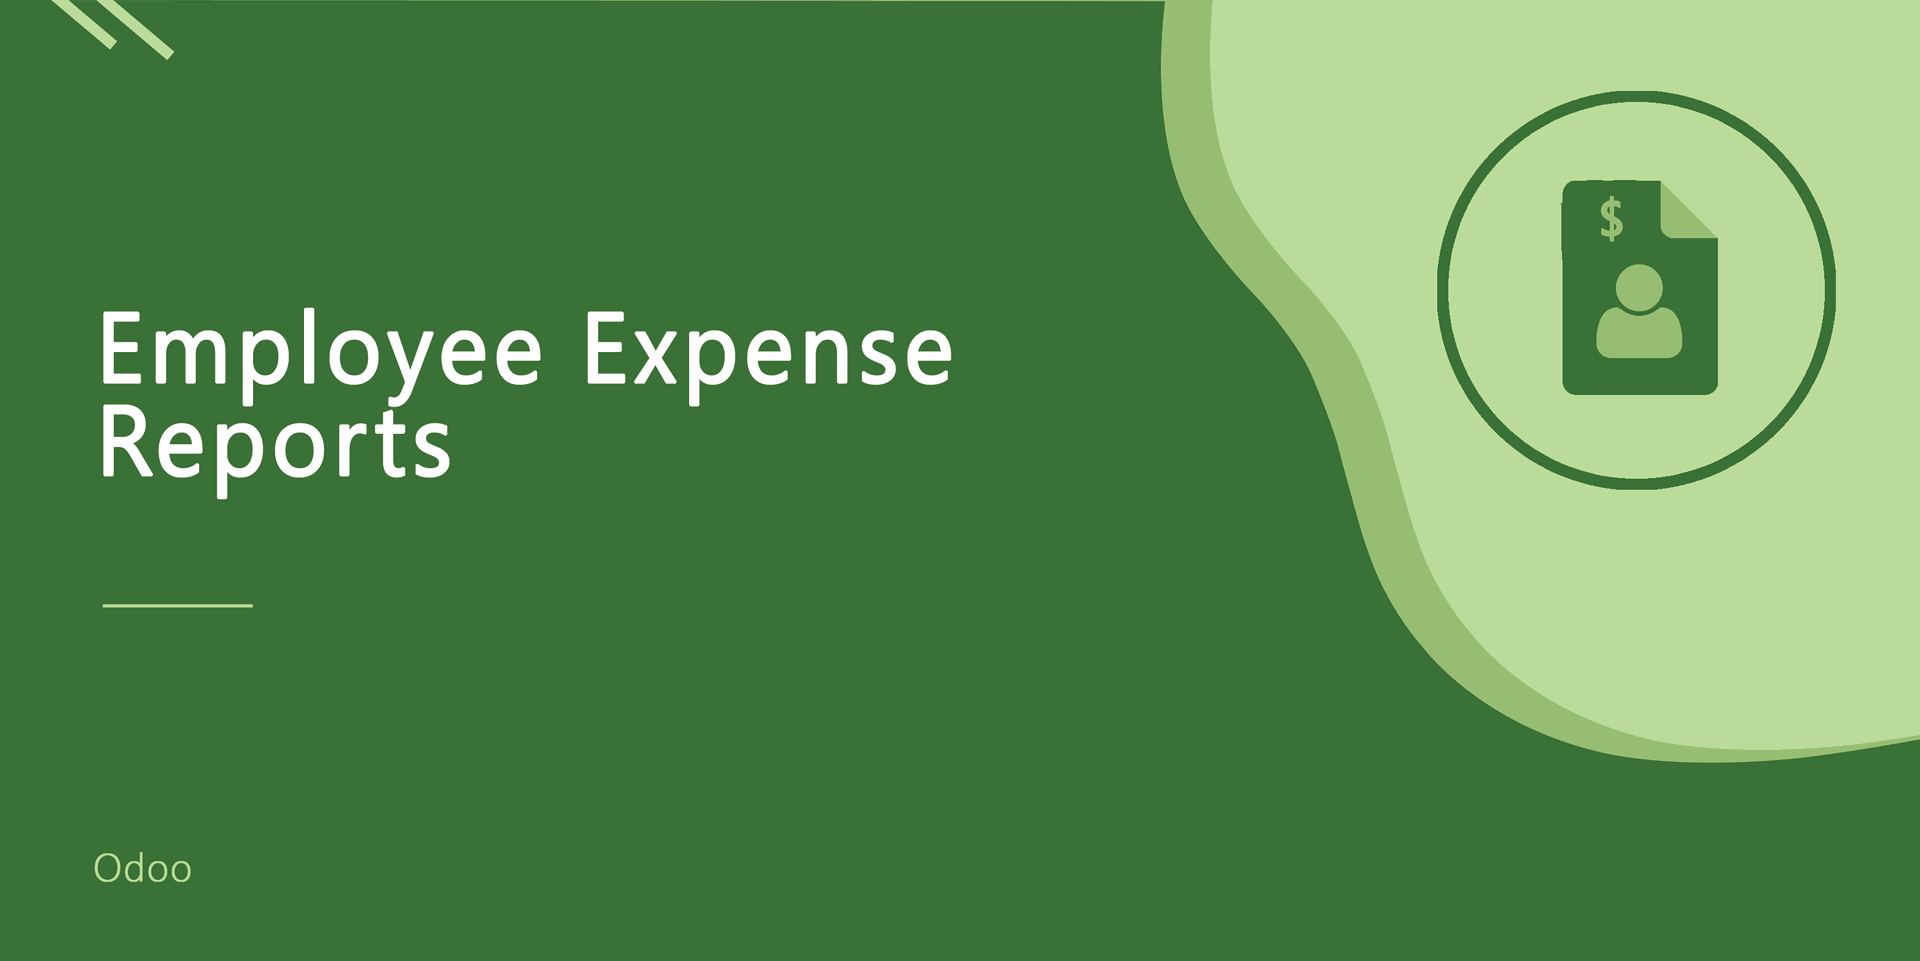 Employee Expense Reports
